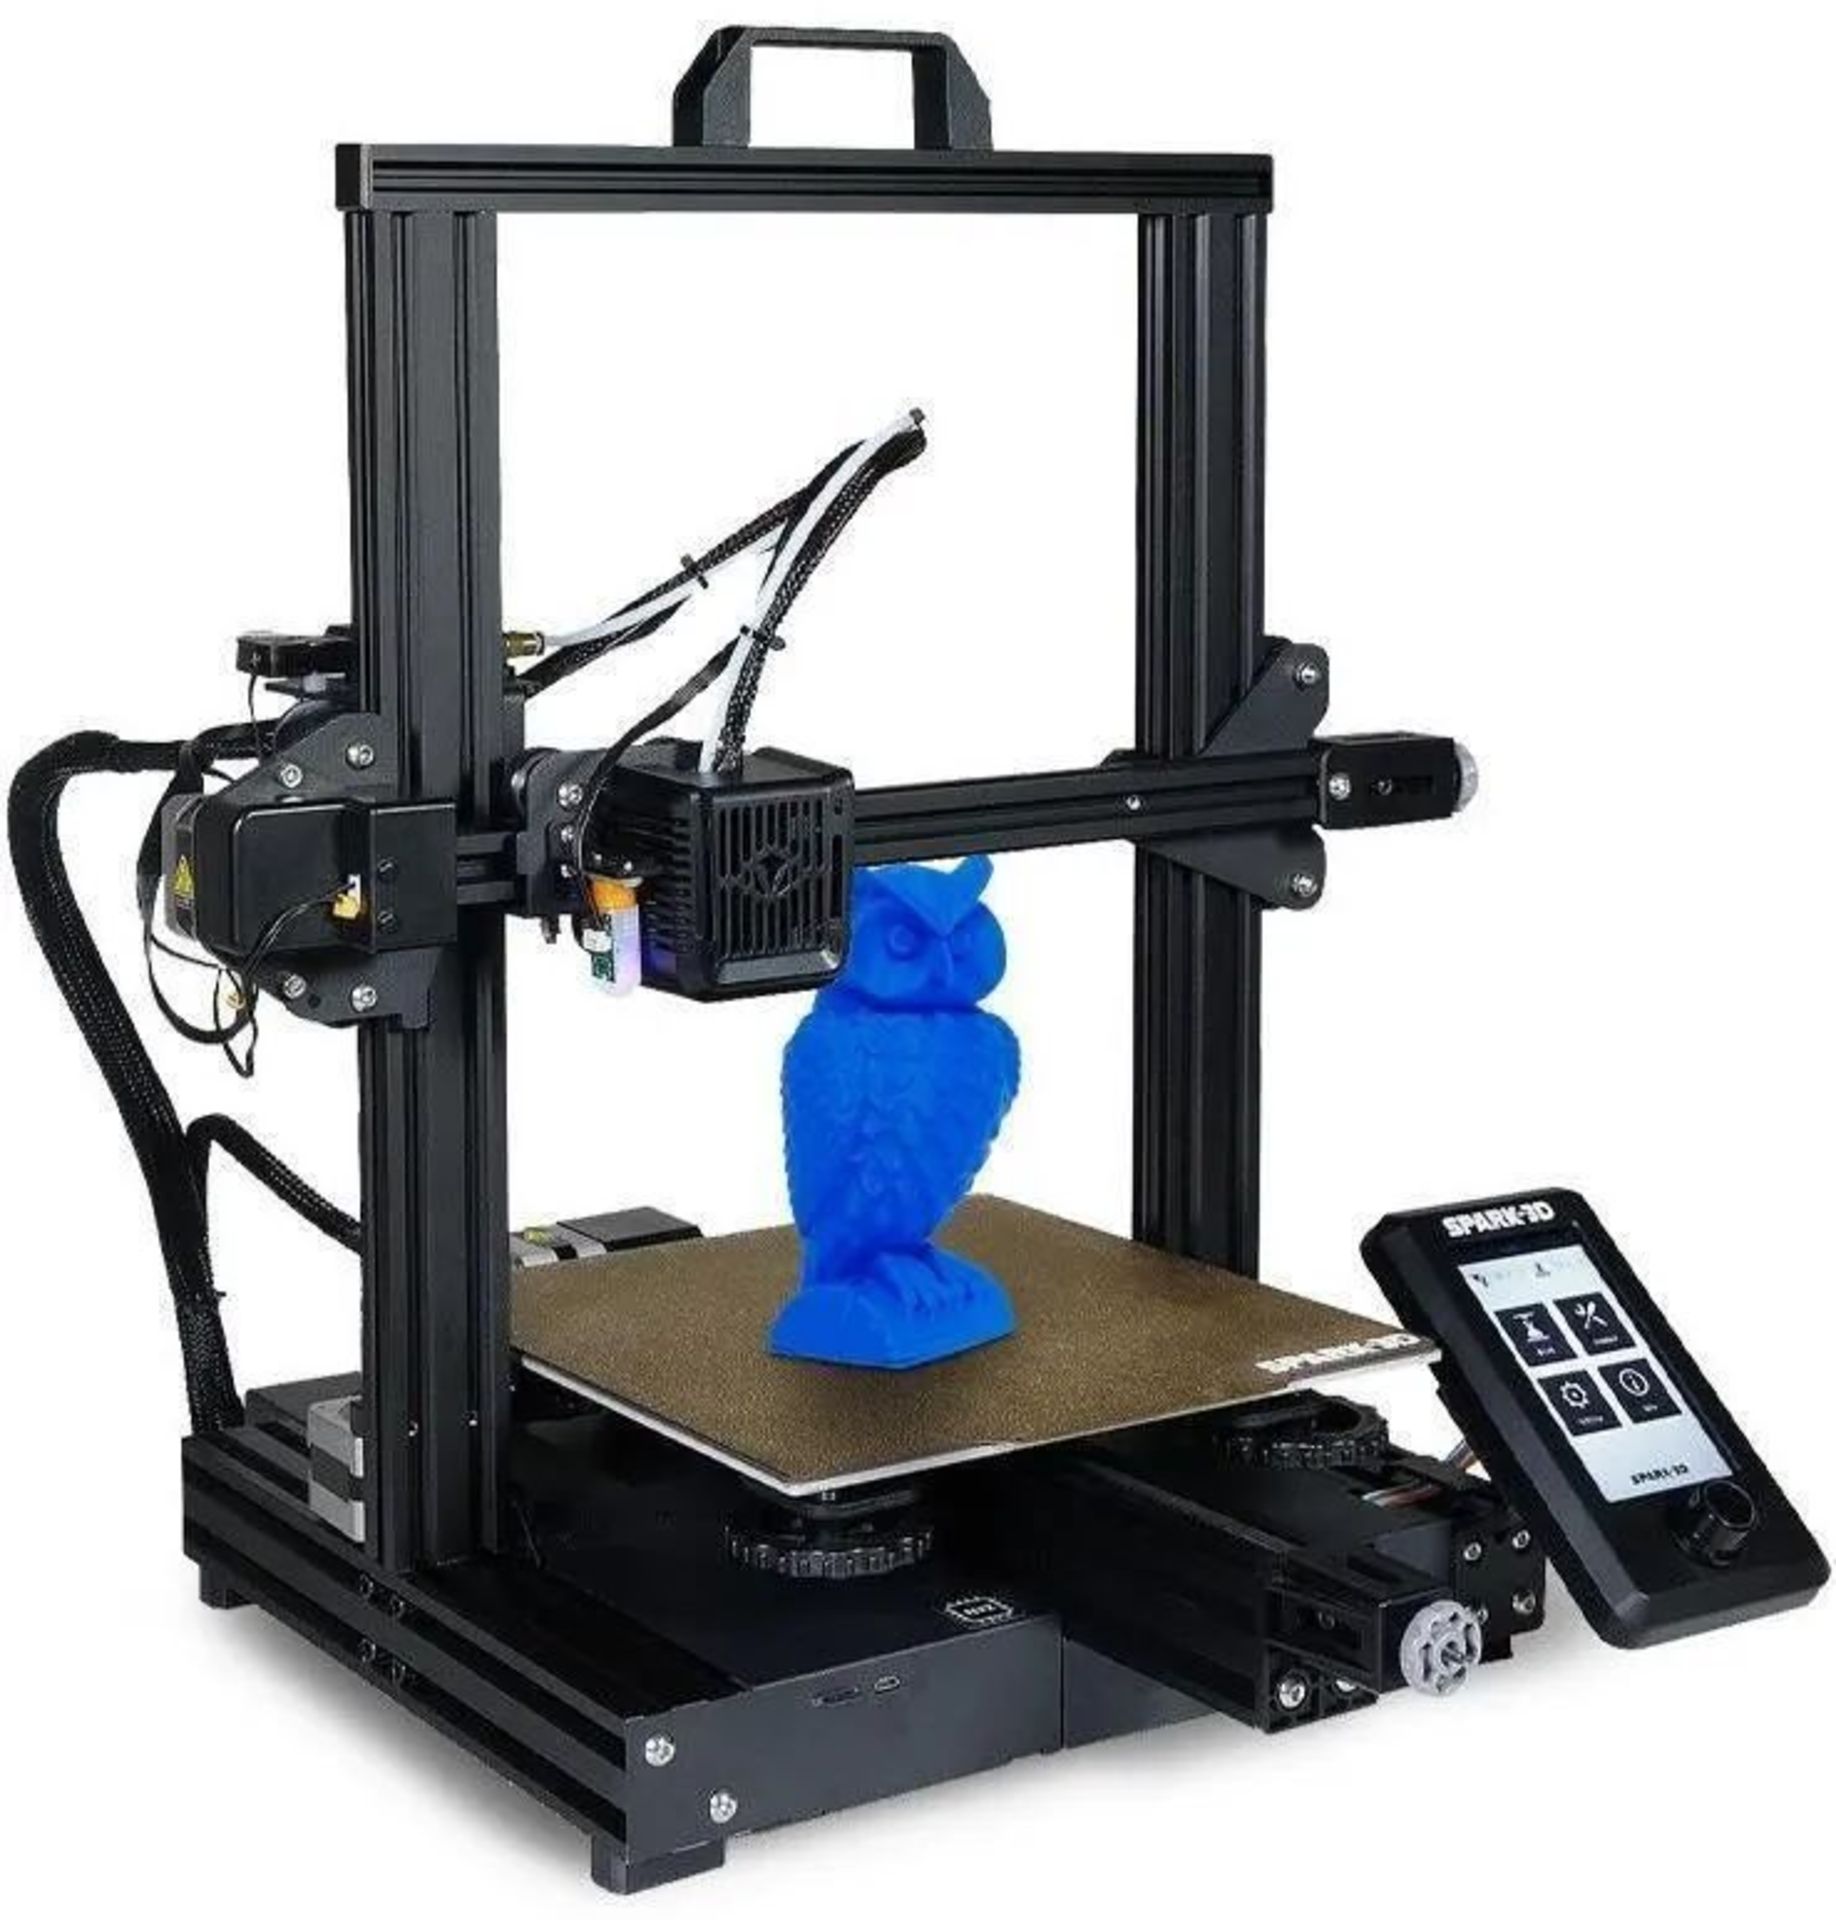 3D Printer Spark 3D SP1 350W. - P1. RRP £679.00. umpstart your creativity with the Spark 3D SP1 3D